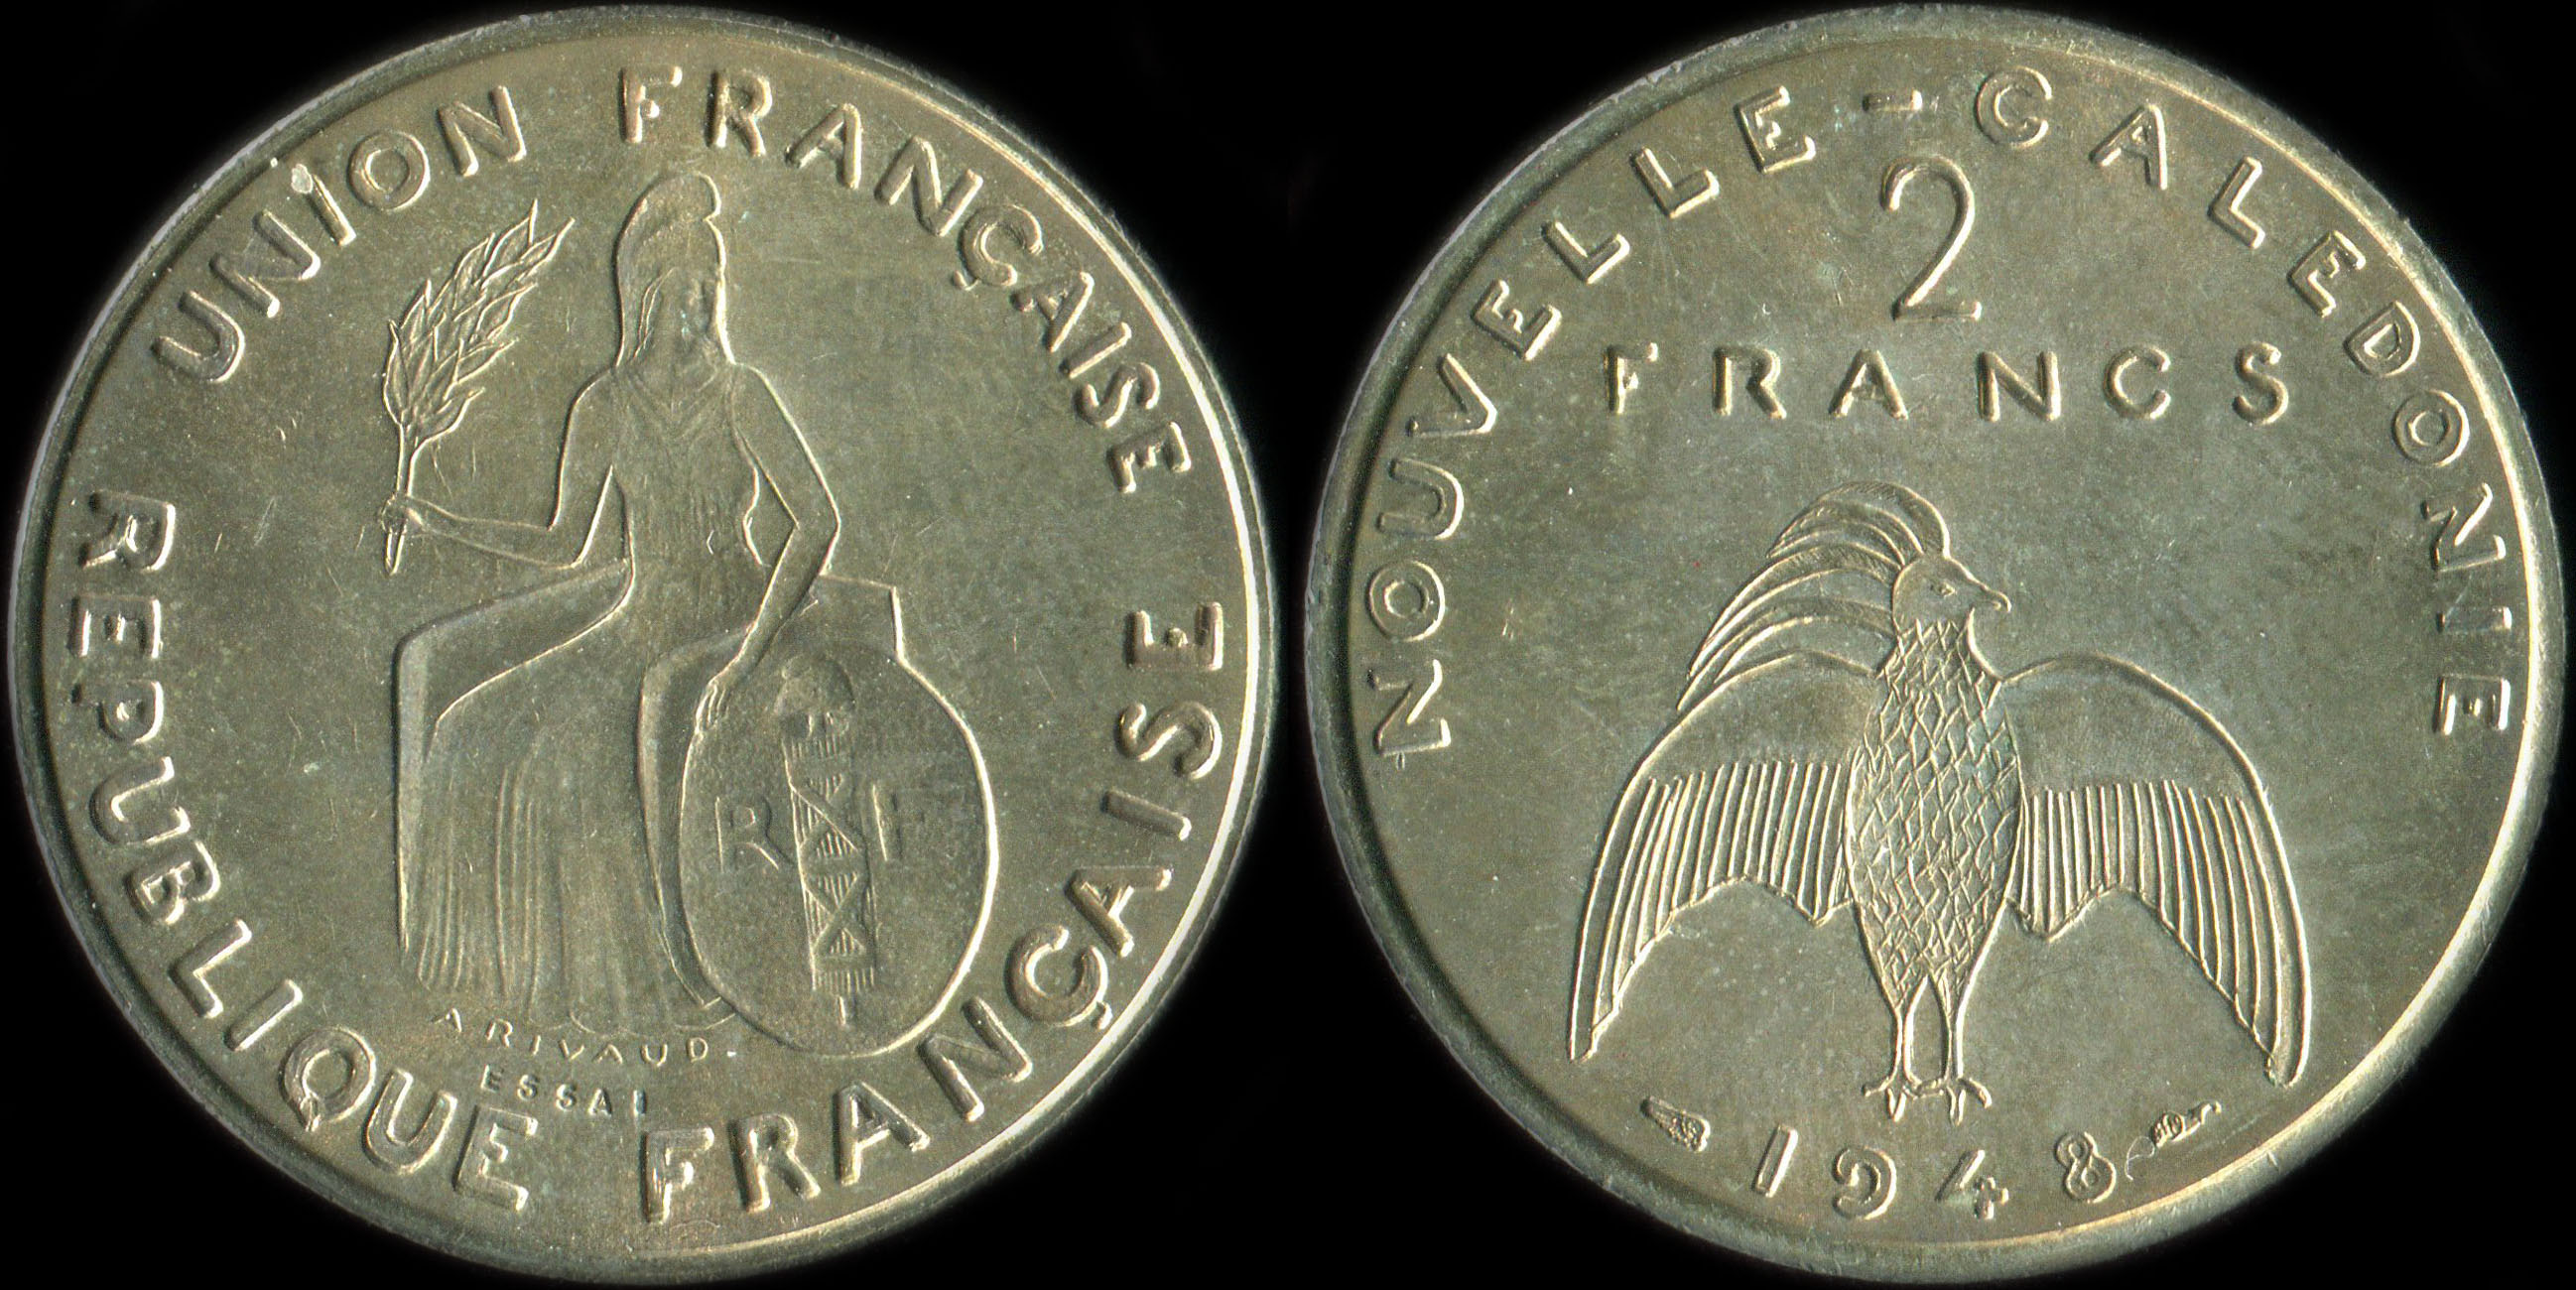 Pice de 2 francs 1948 - Essai de Andr Rivaud (avec listel)